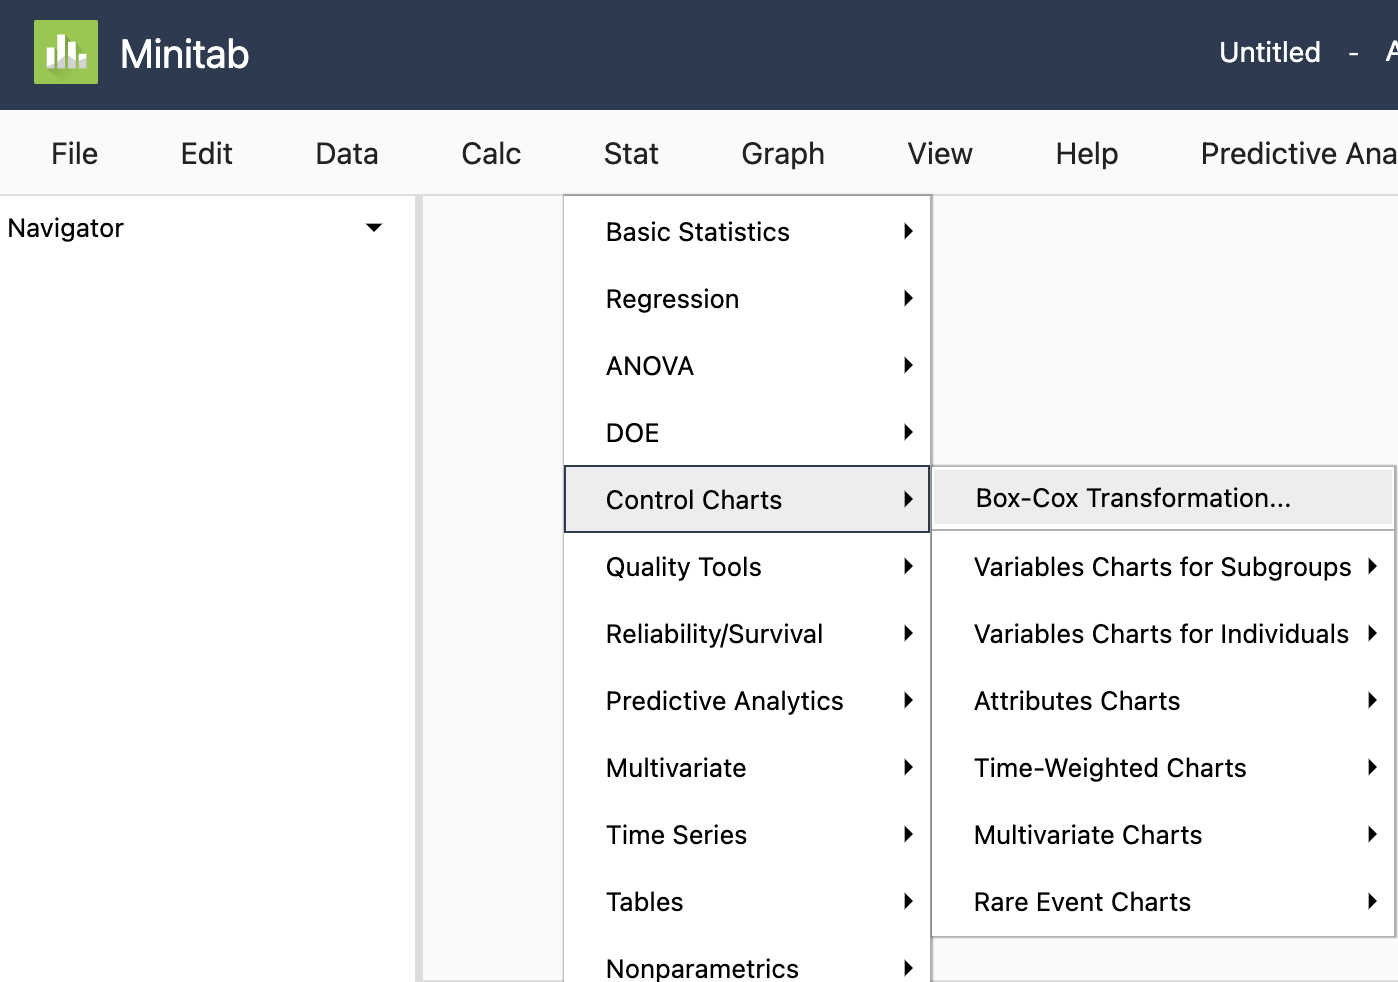 "Minitab menu selection of STAT > Control Charts > Box-Cox Transformation"